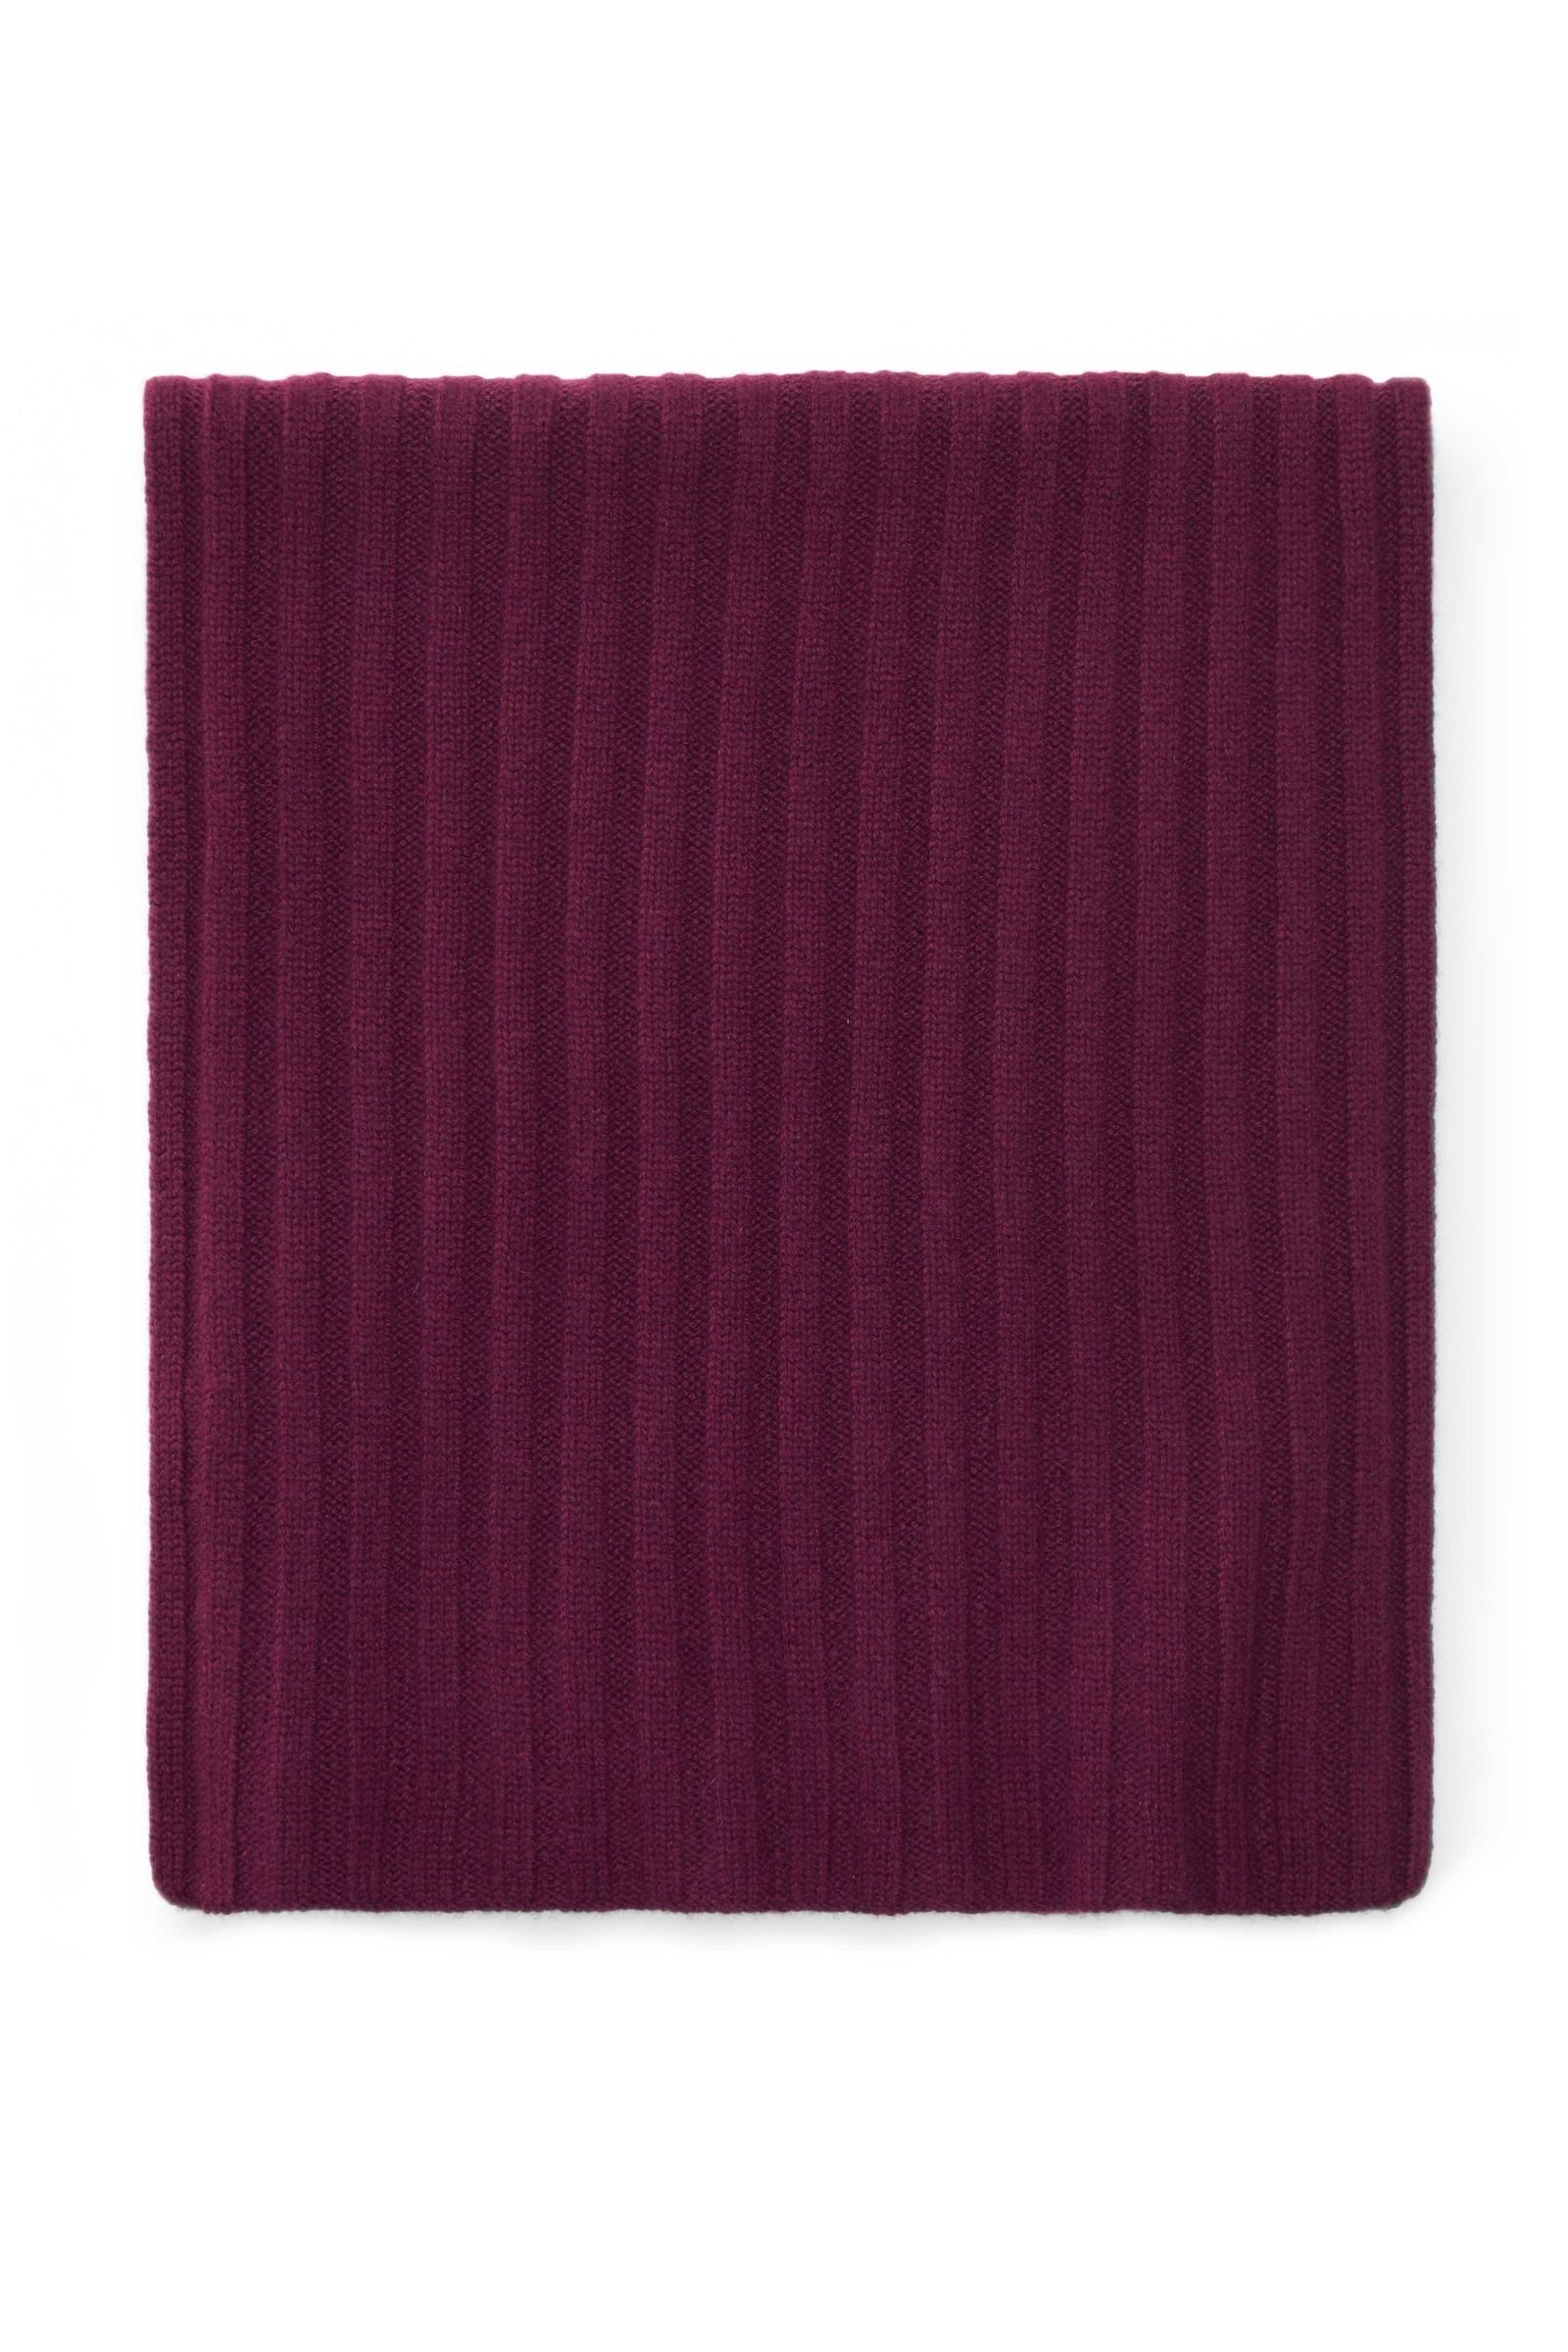 Cashmere scarf burgundy